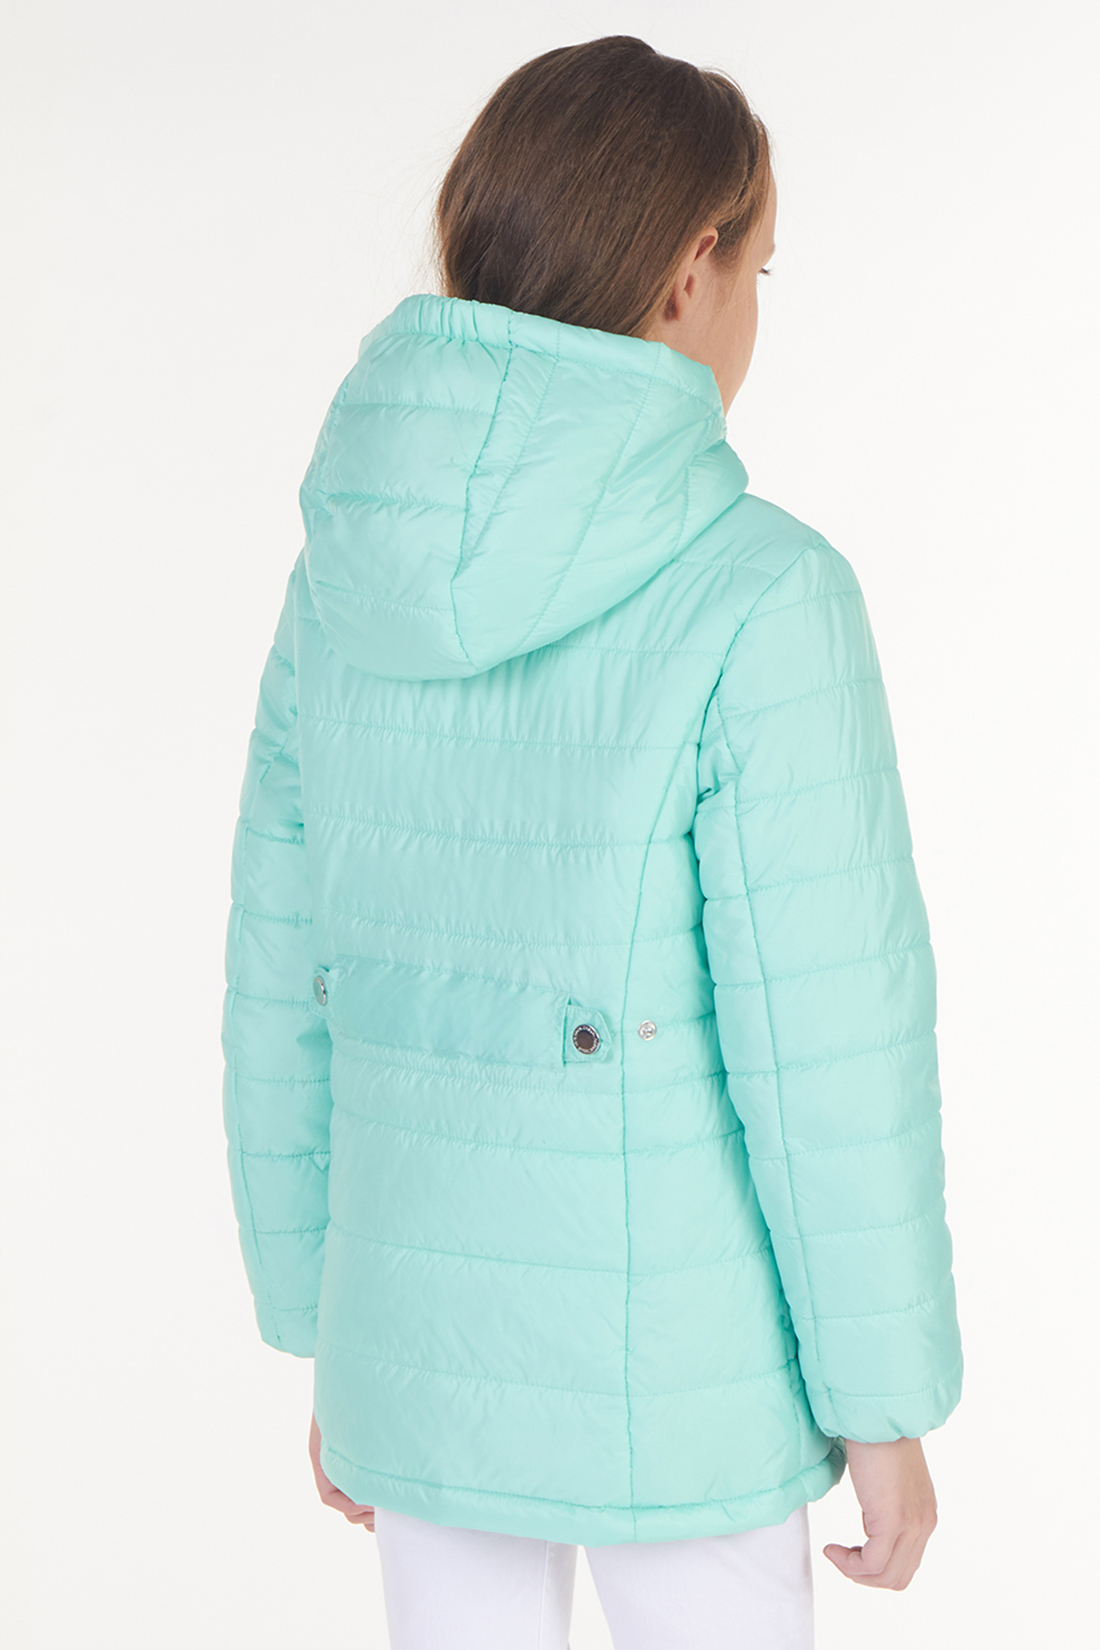 Куртка для девочки (арт. baon BJ038001), размер 158, цвет зеленый Куртка для девочки (арт. baon BJ038001) - фото 2